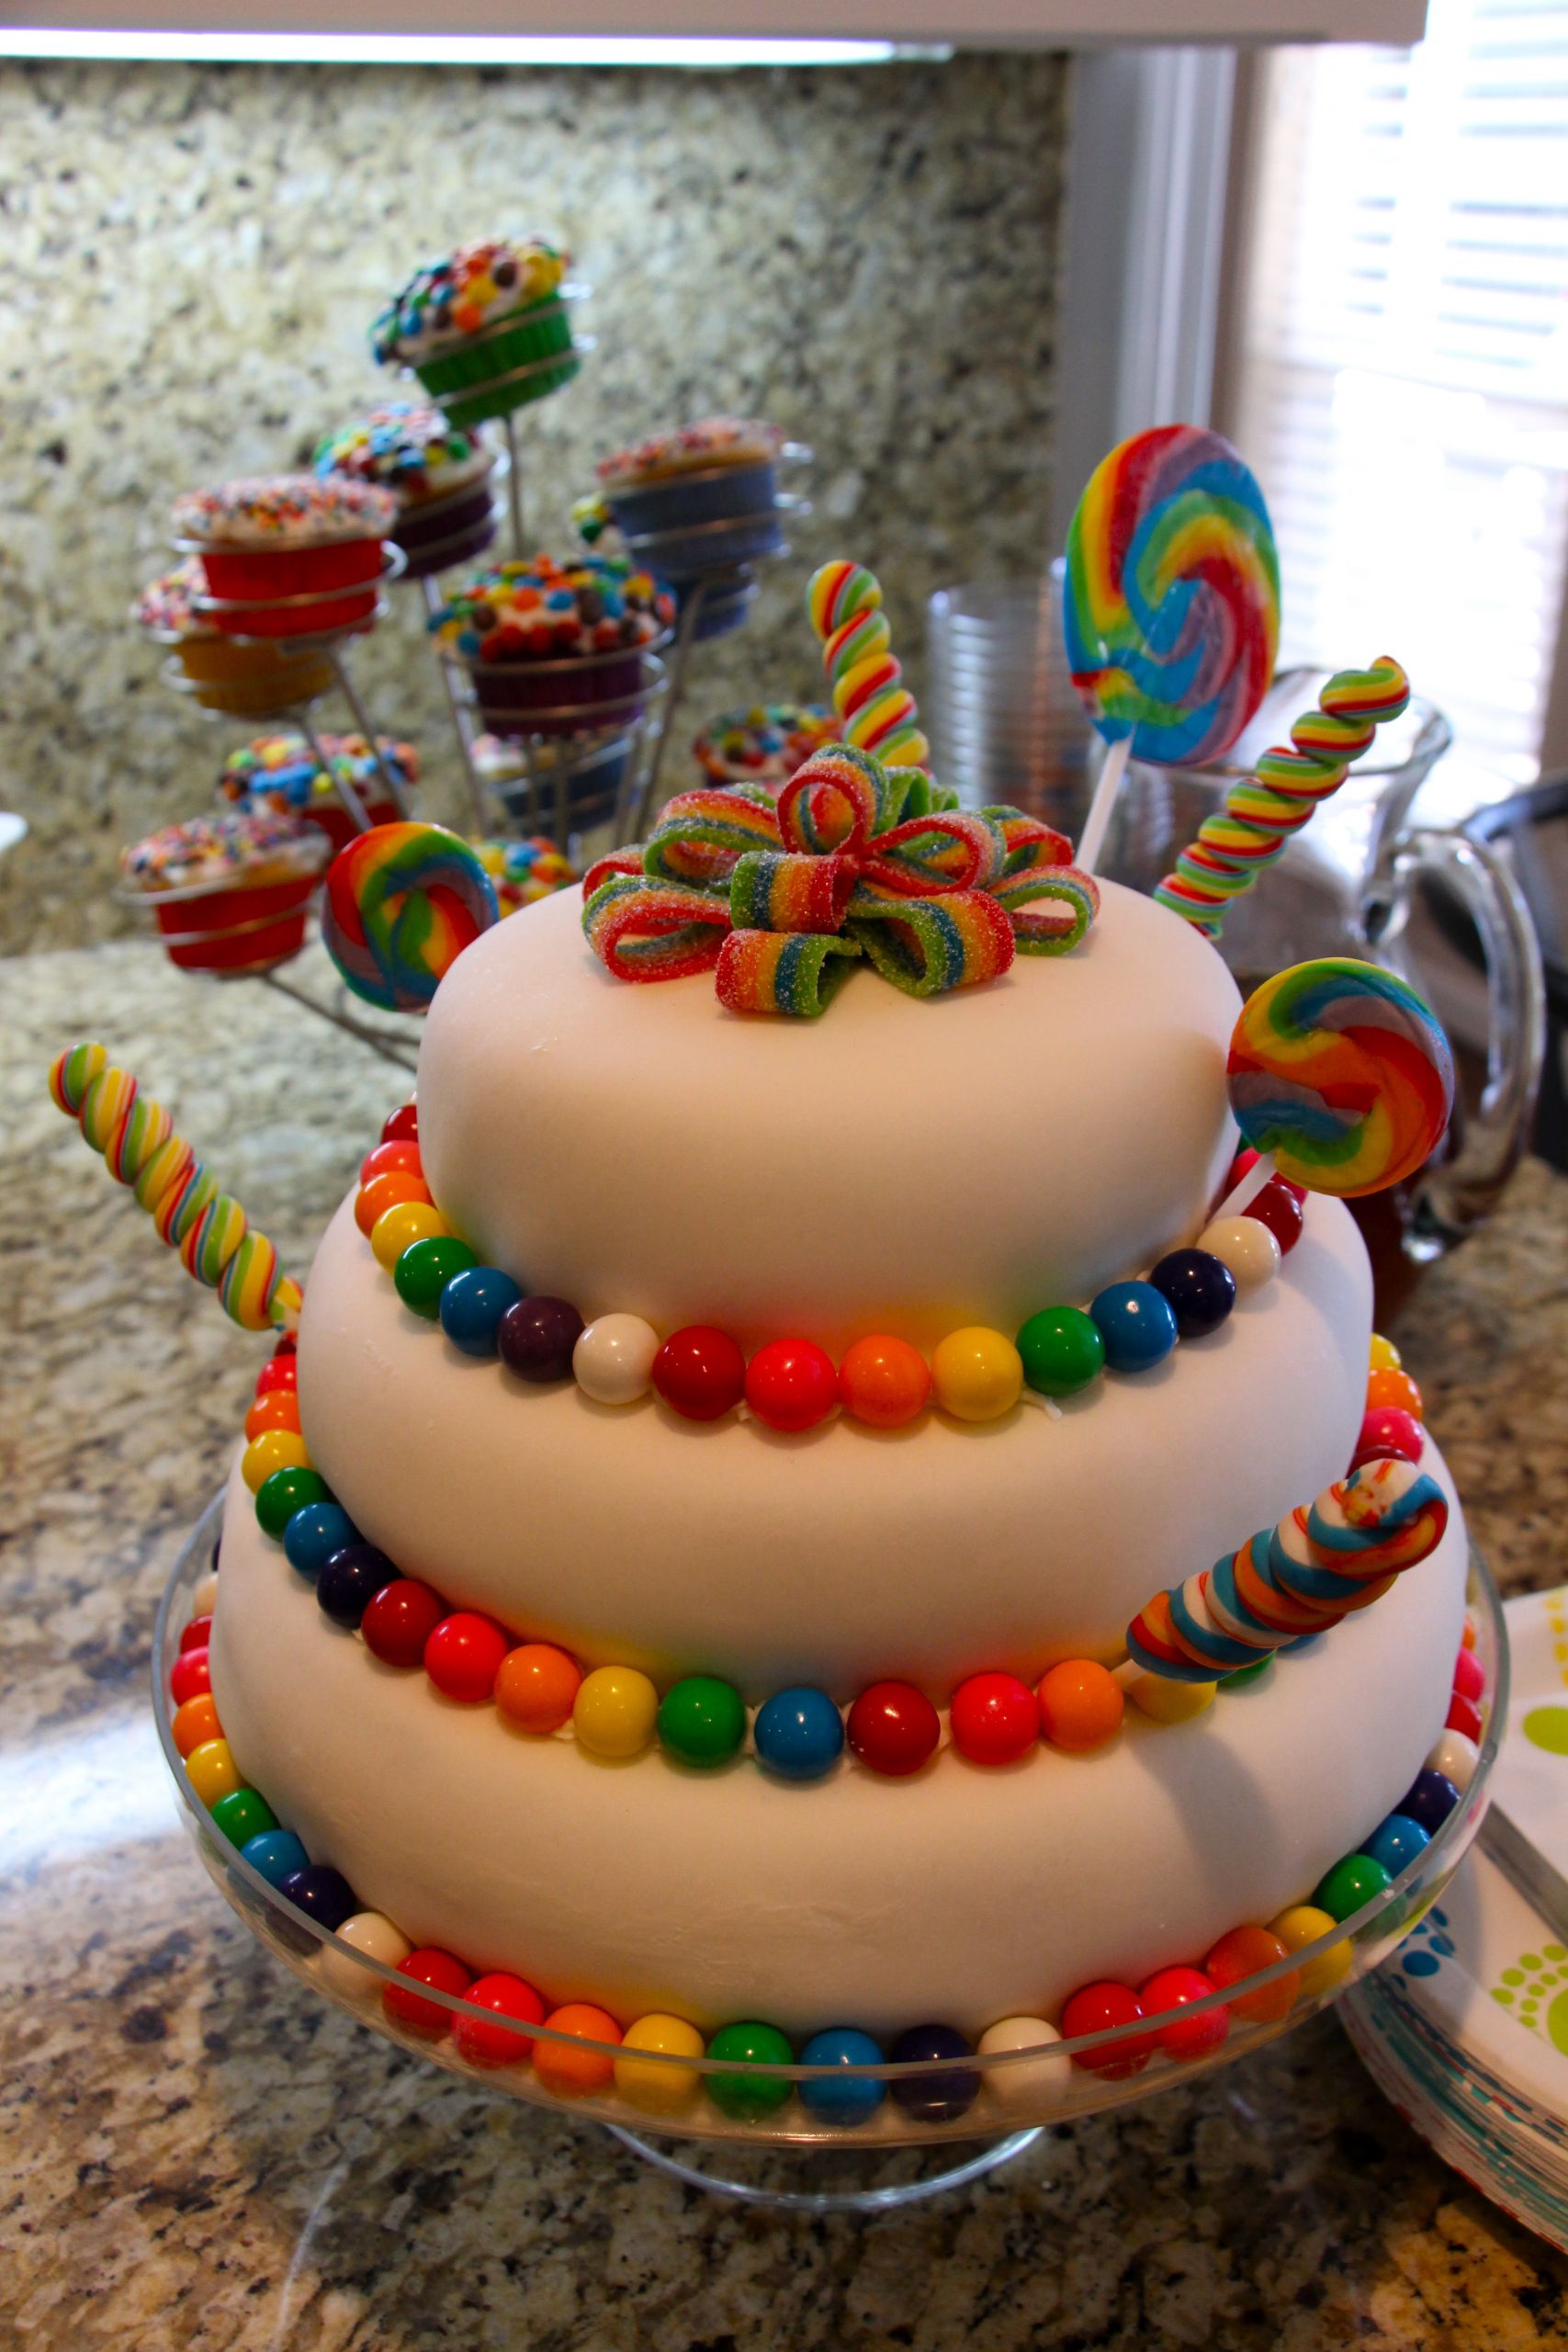 Birthday Cakes Designs
 A Sweet Celebration